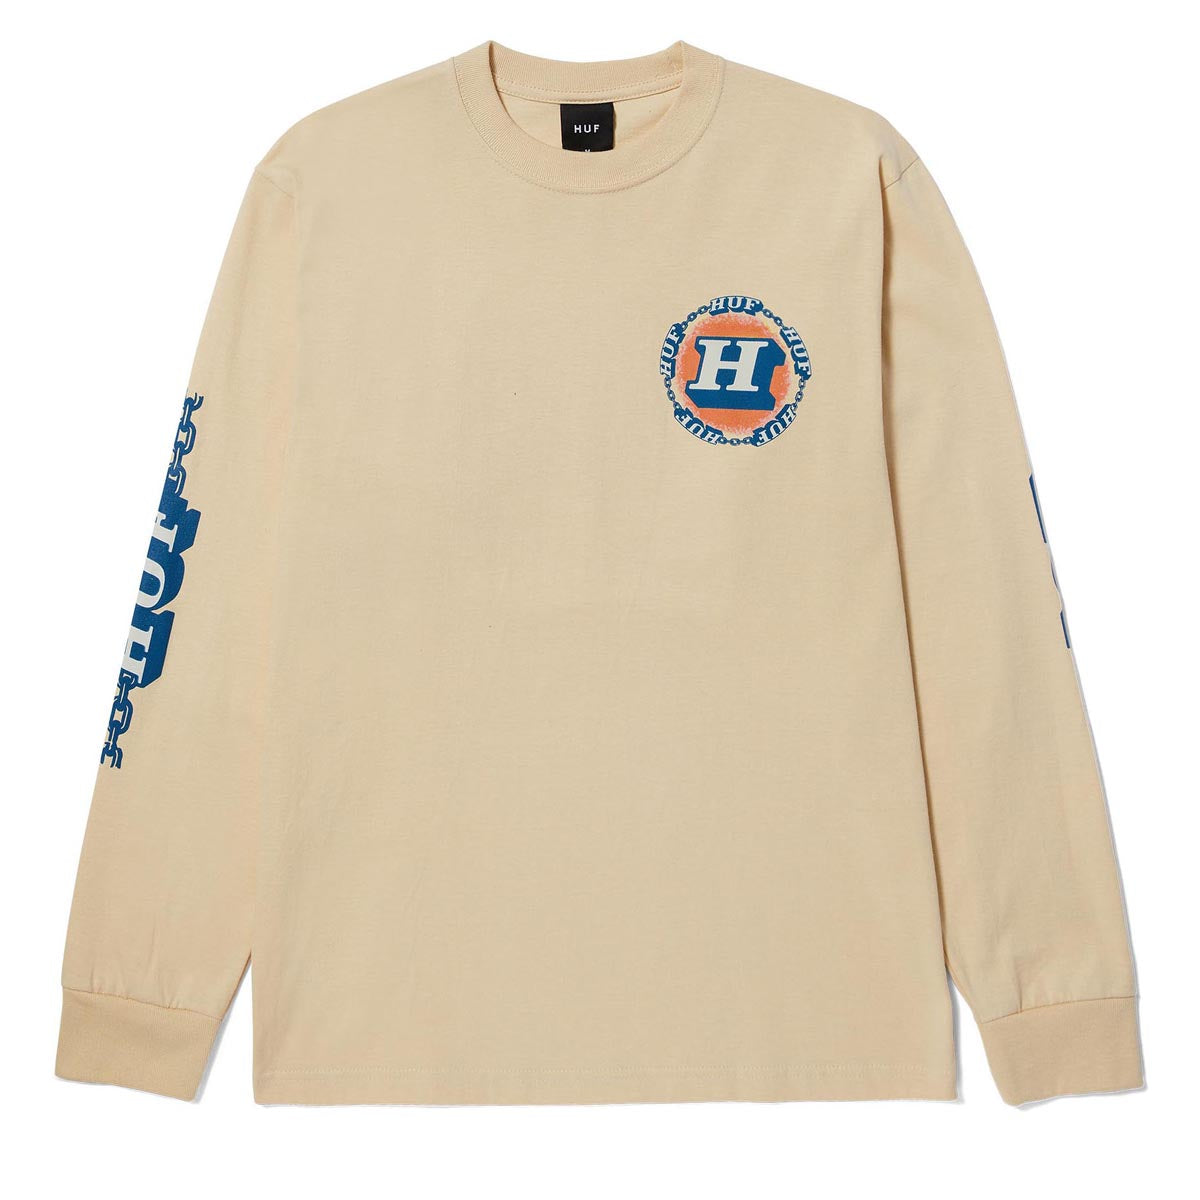 HUF Dependable Long Sleeve T-Shirt - Wheat image 1